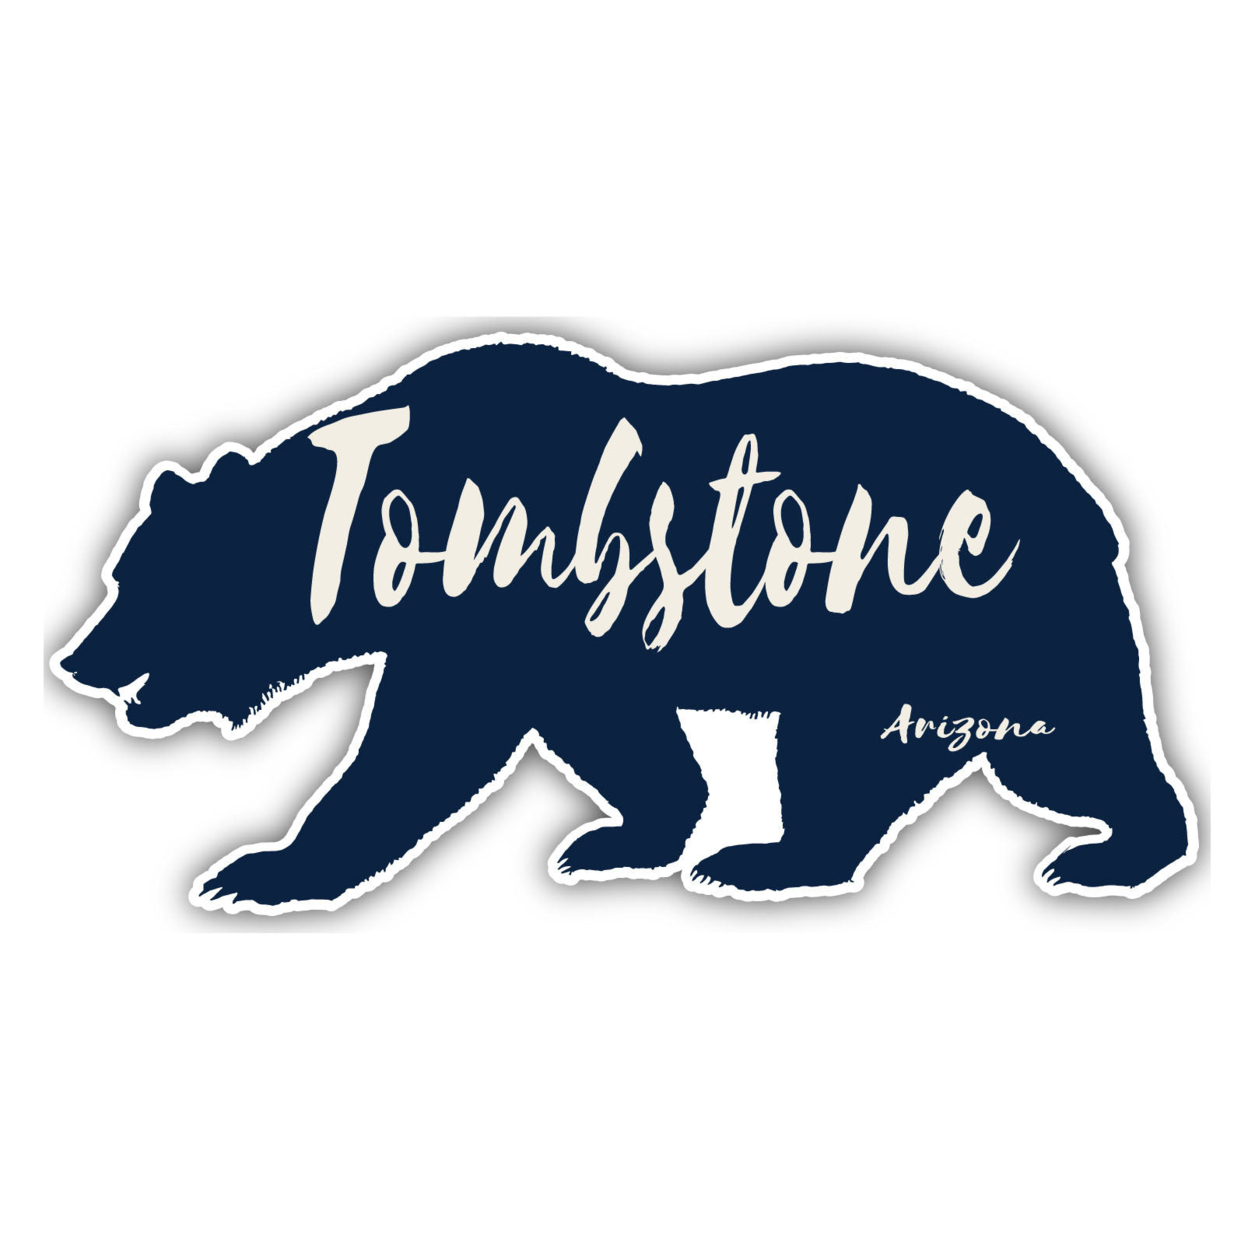 Tombstone Arizona Souvenir Decorative Stickers (Choose Theme And Size) - Single Unit, 4-Inch, Adventures Awaits